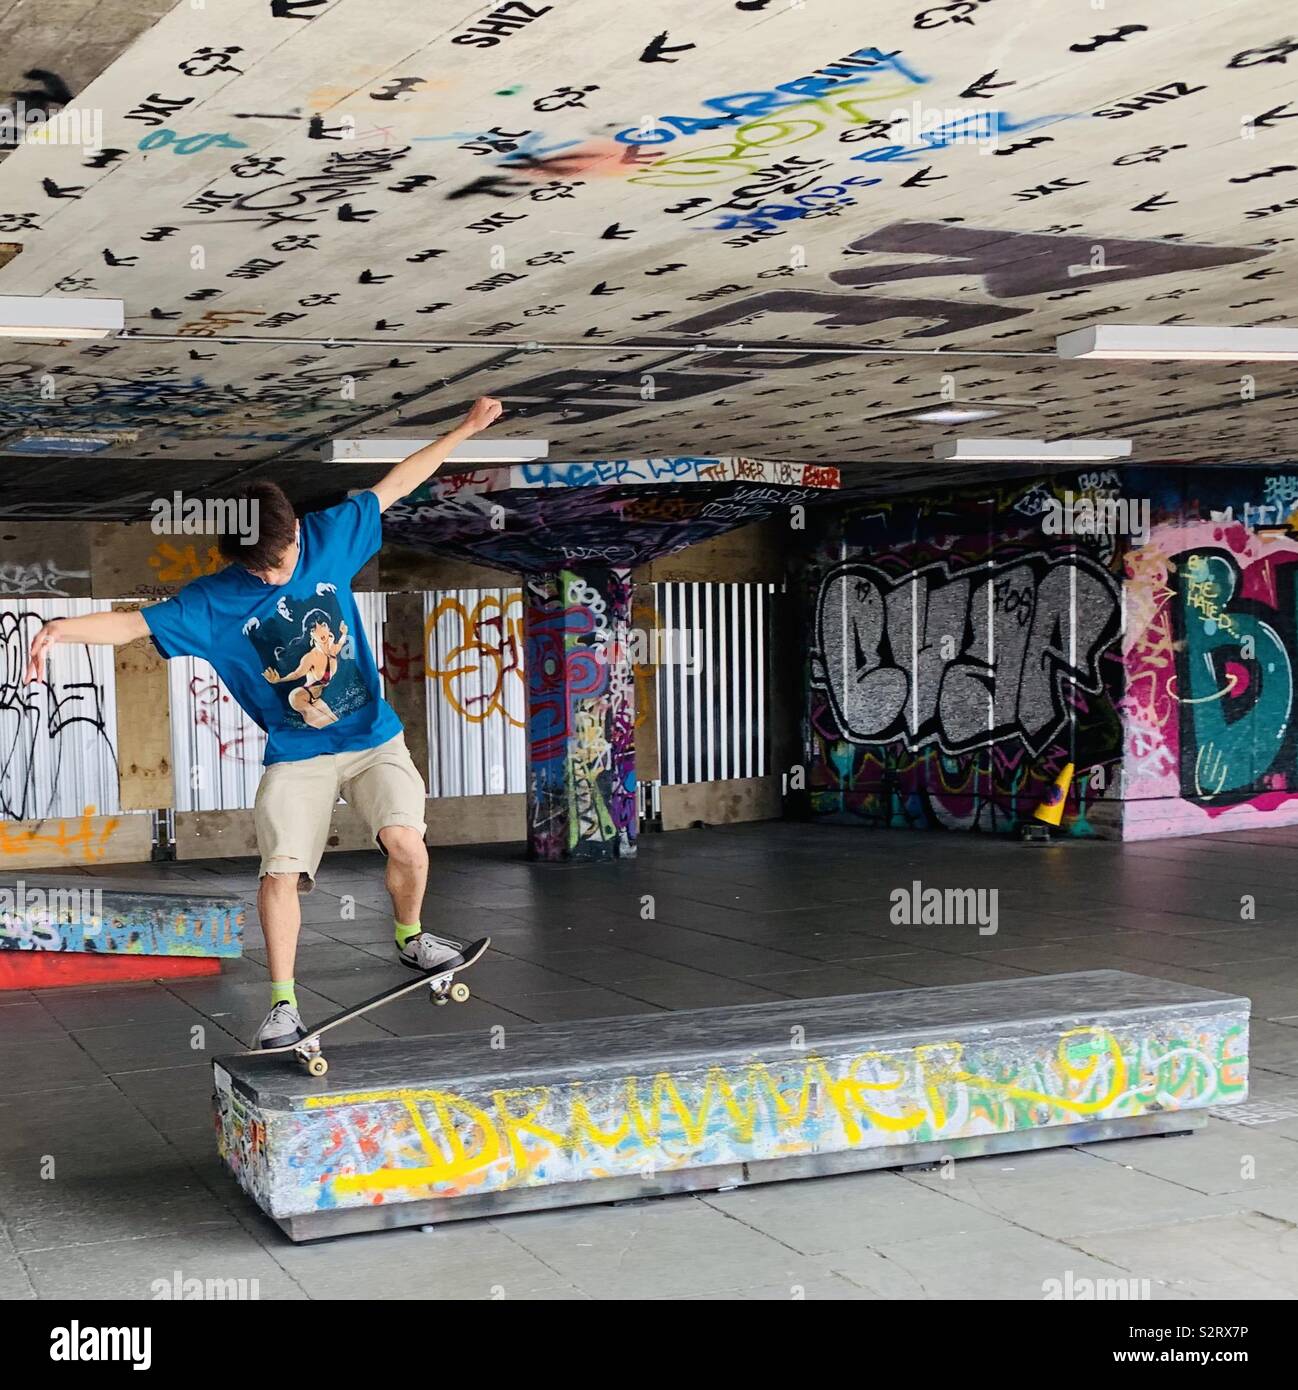 Skateboarder in action Stock Photo